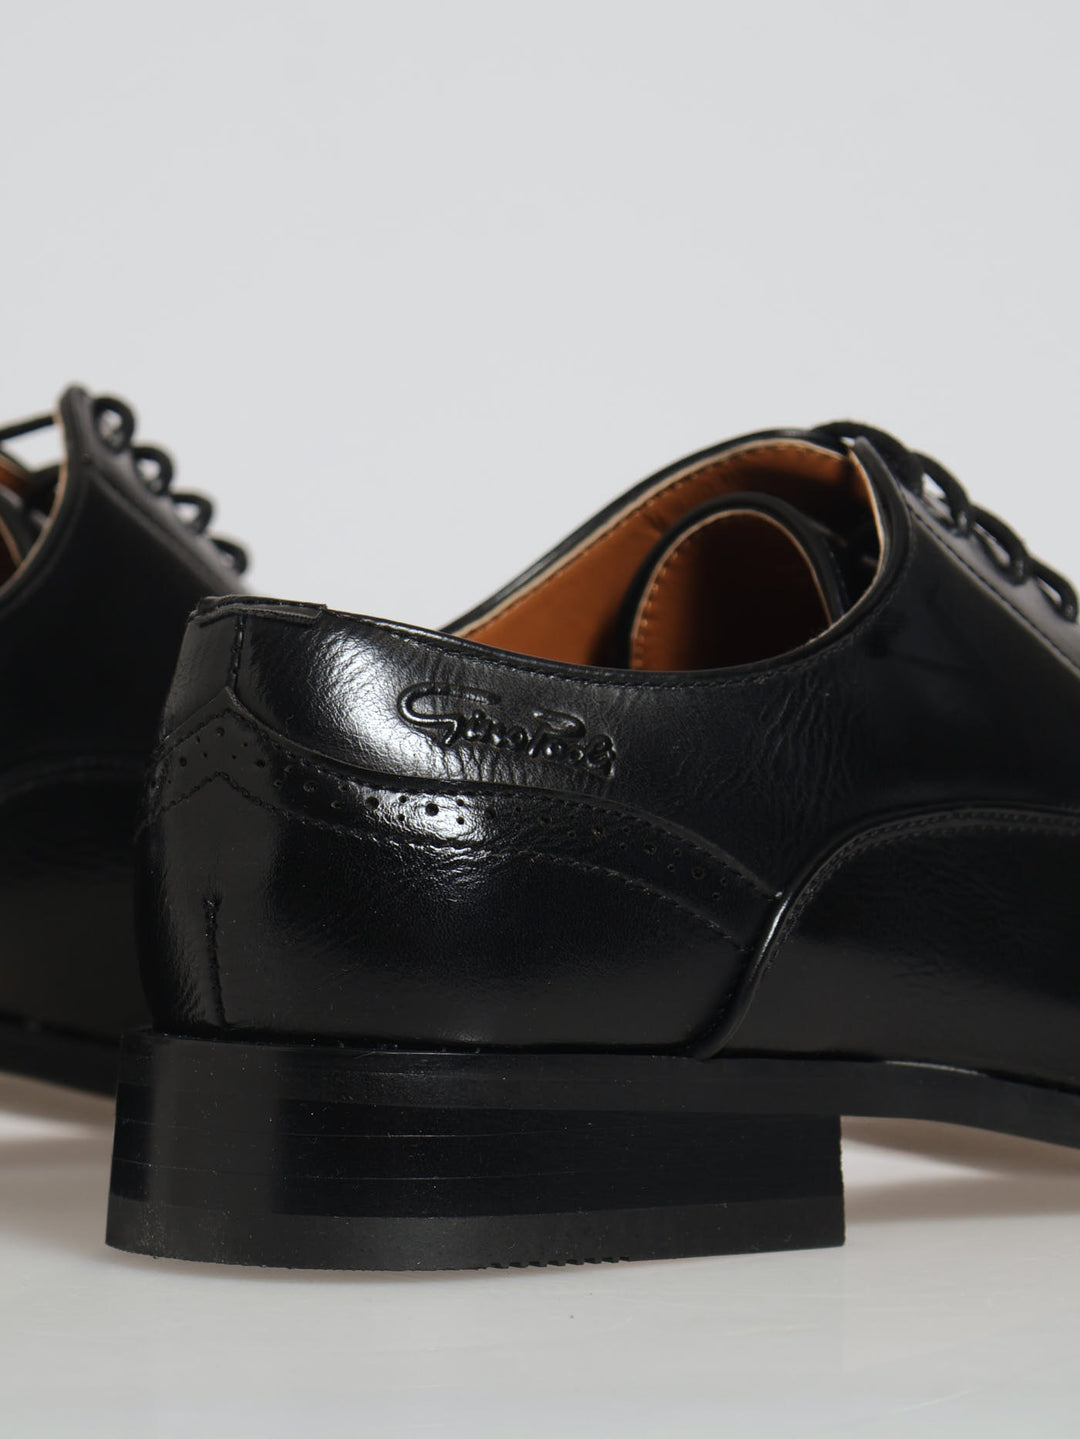 Toe Pin Punch Pattern Lace Up Oxford Shoe - Black